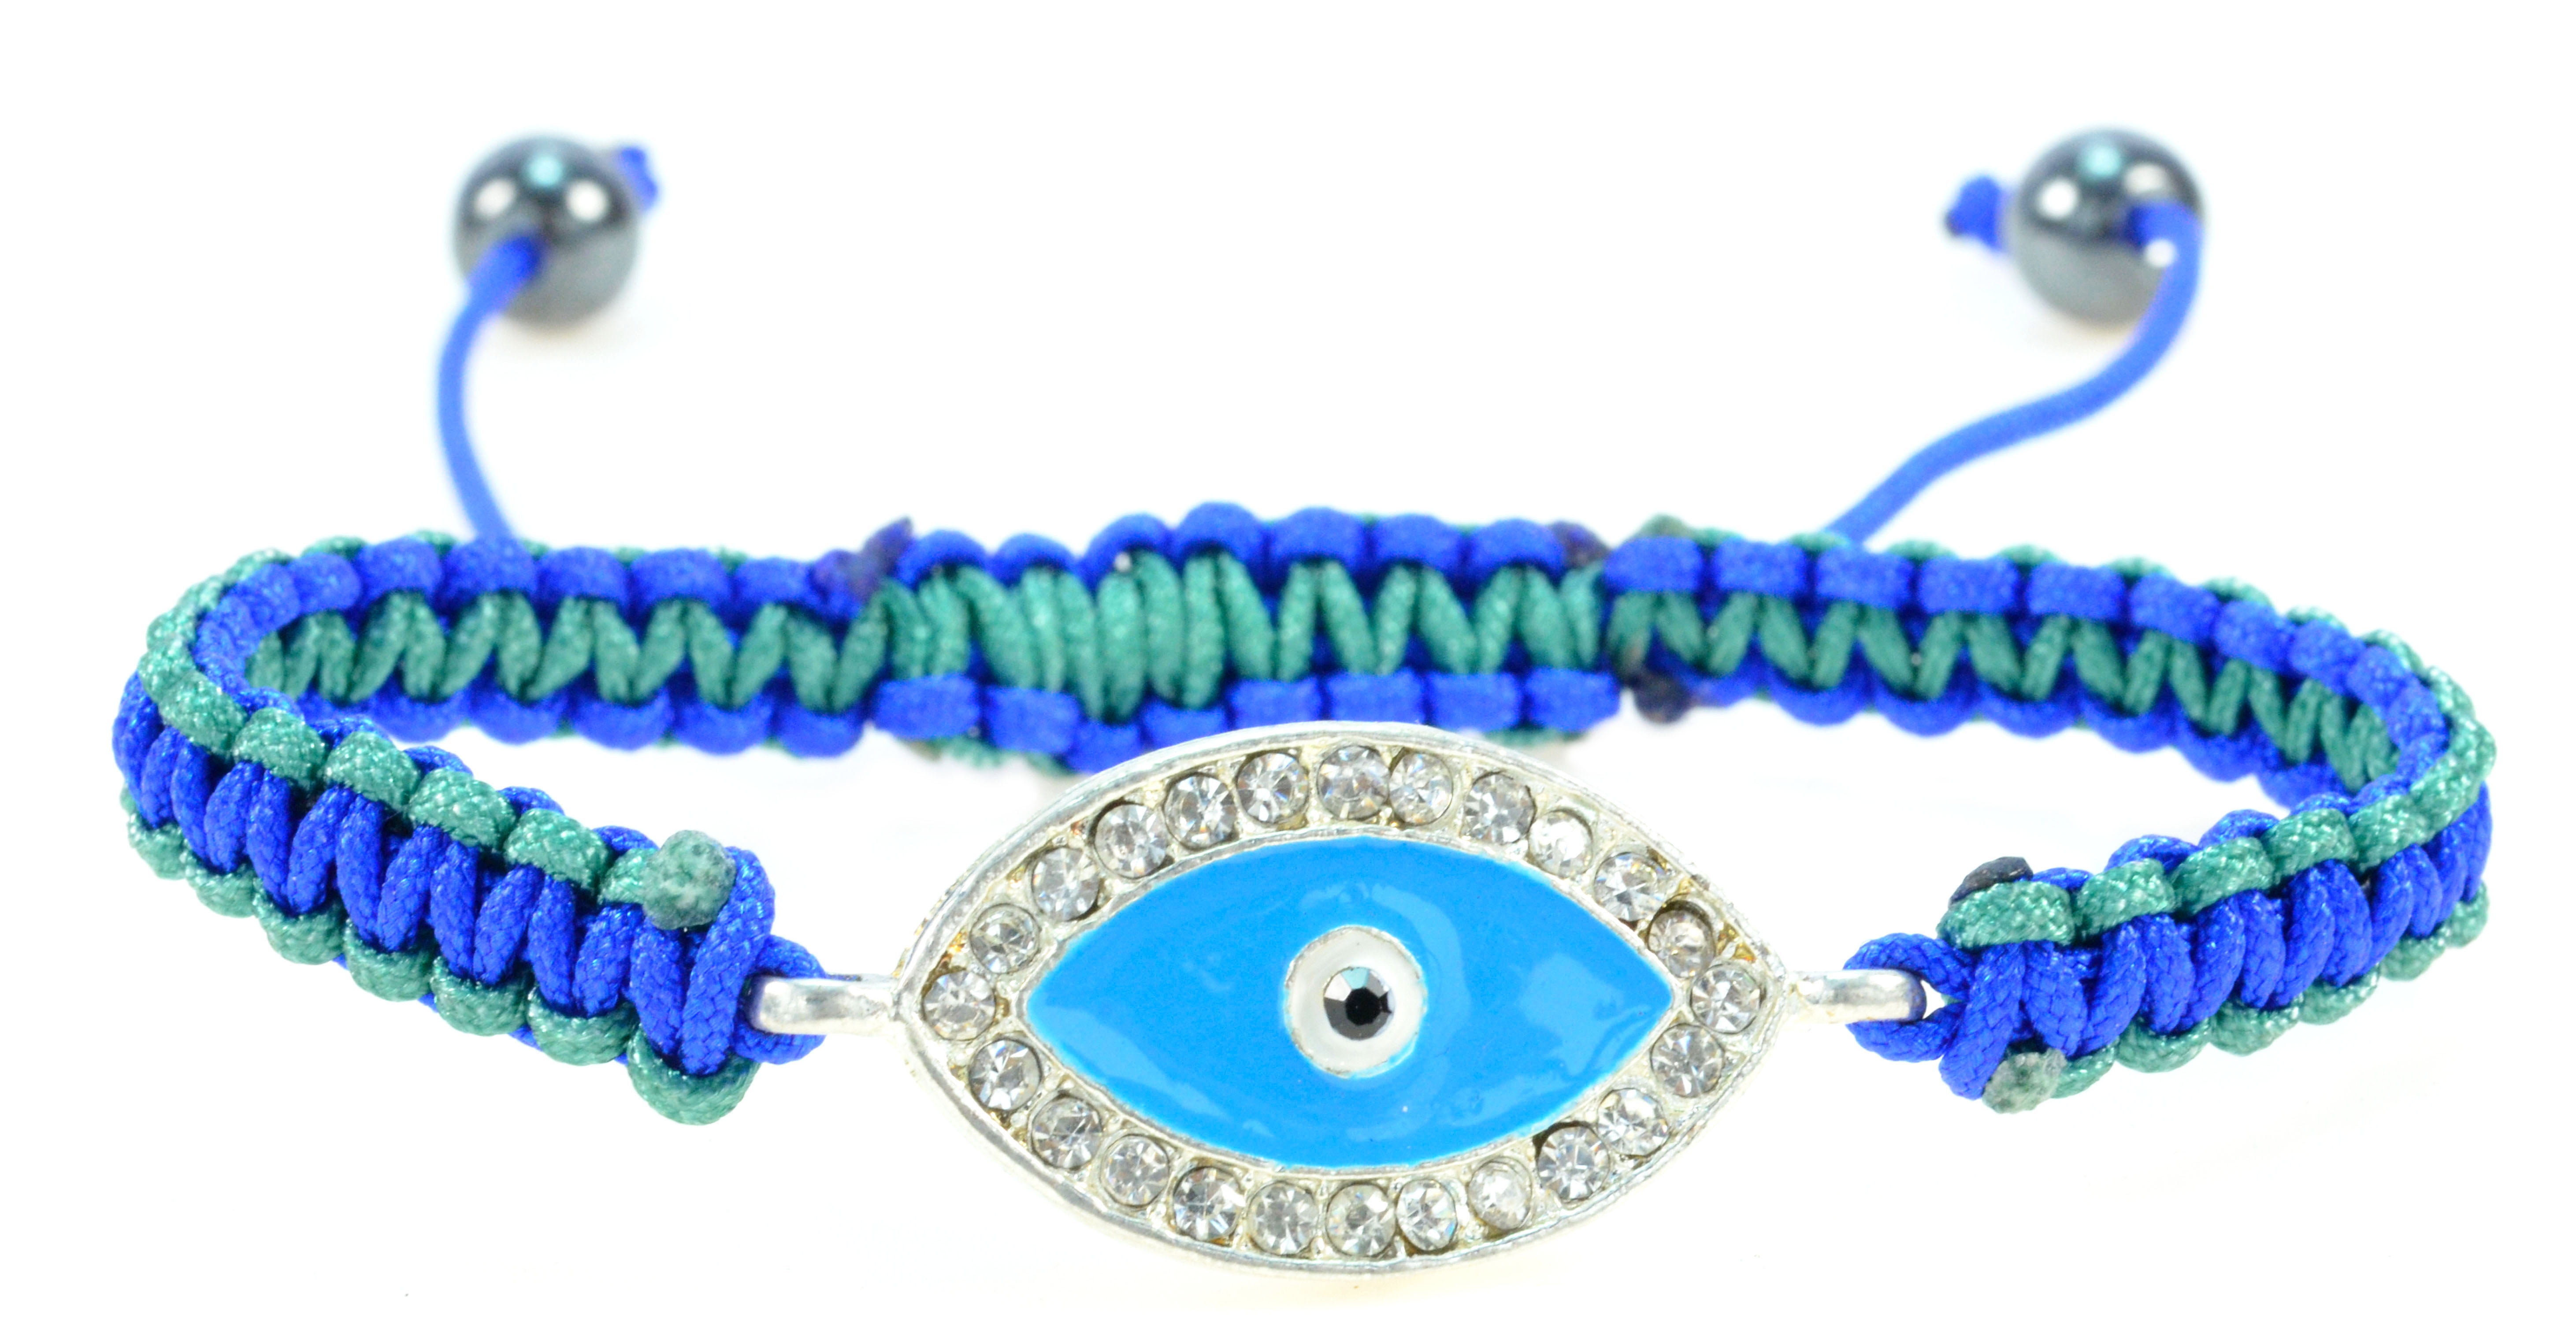 Shades of Blue Unique Blue Rhinestone Snake Chain Silvertone Bracelet Adjustable Size 